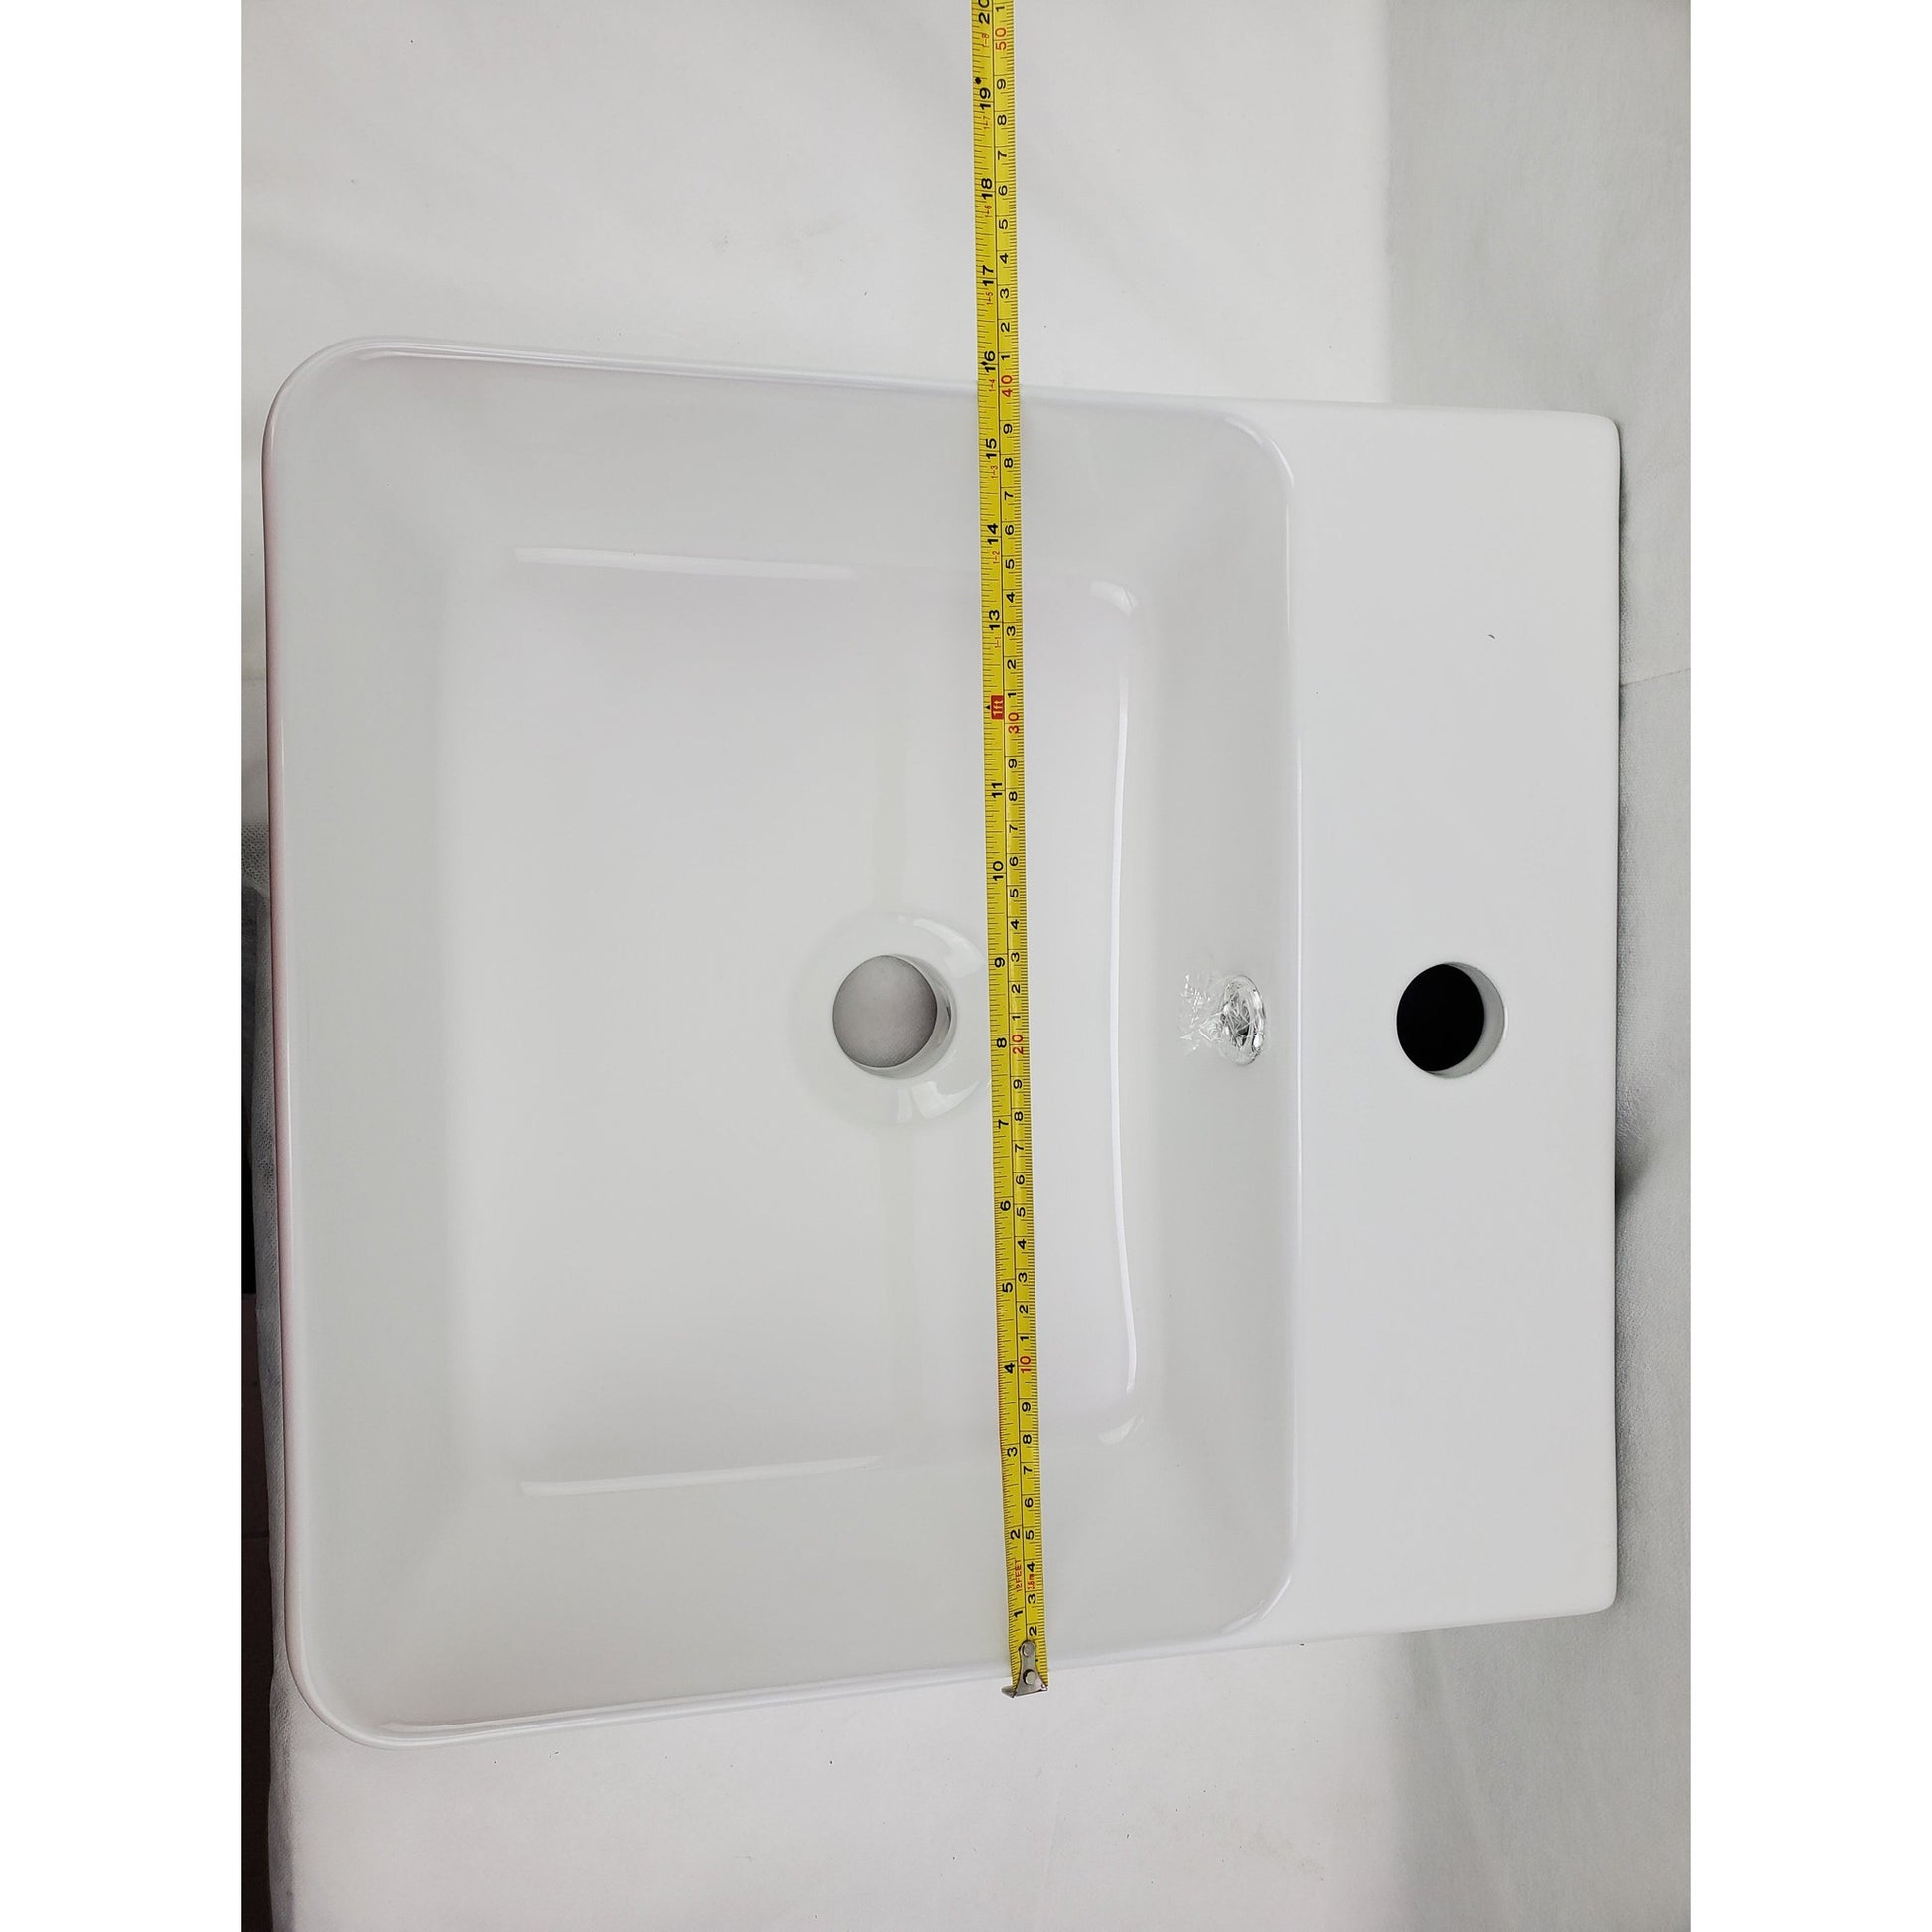 American Imaginations AI-28142 Rectangle White Ceramic Bathroom Vessel Sink with Enamel Glaze Finish